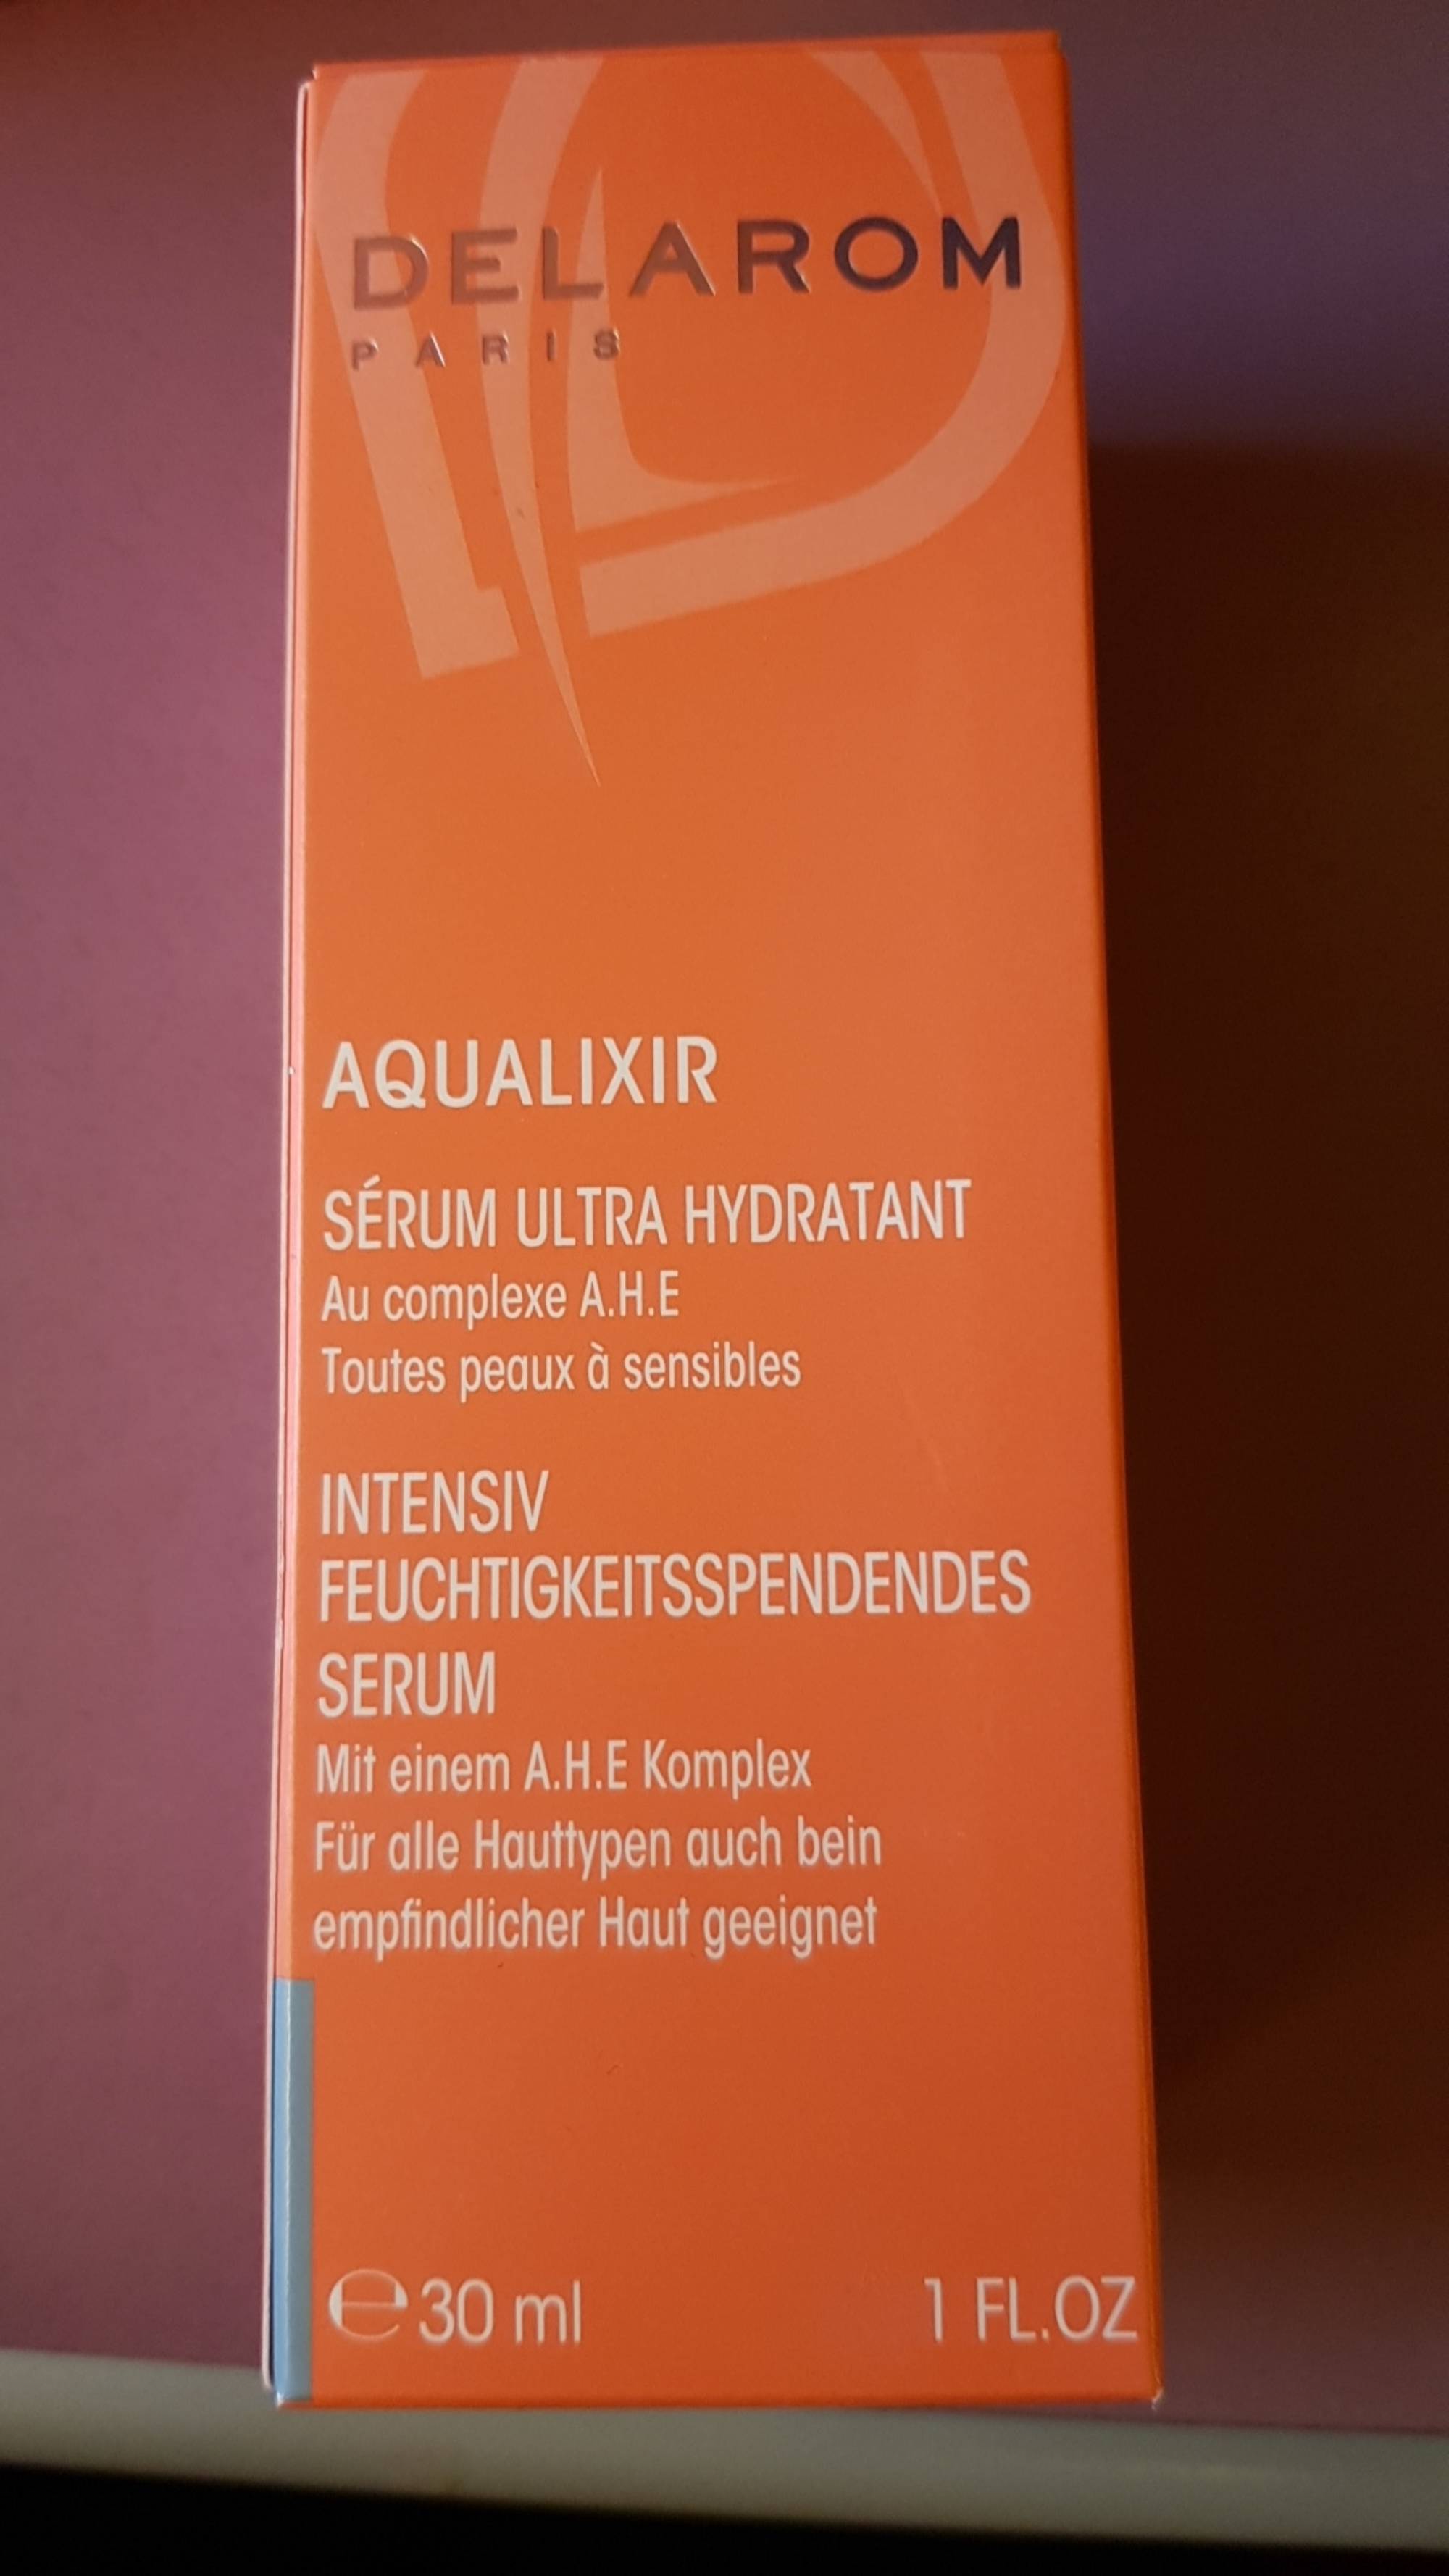 DELAROM PARIS - Aqualixir - Sérum ultra hydratant